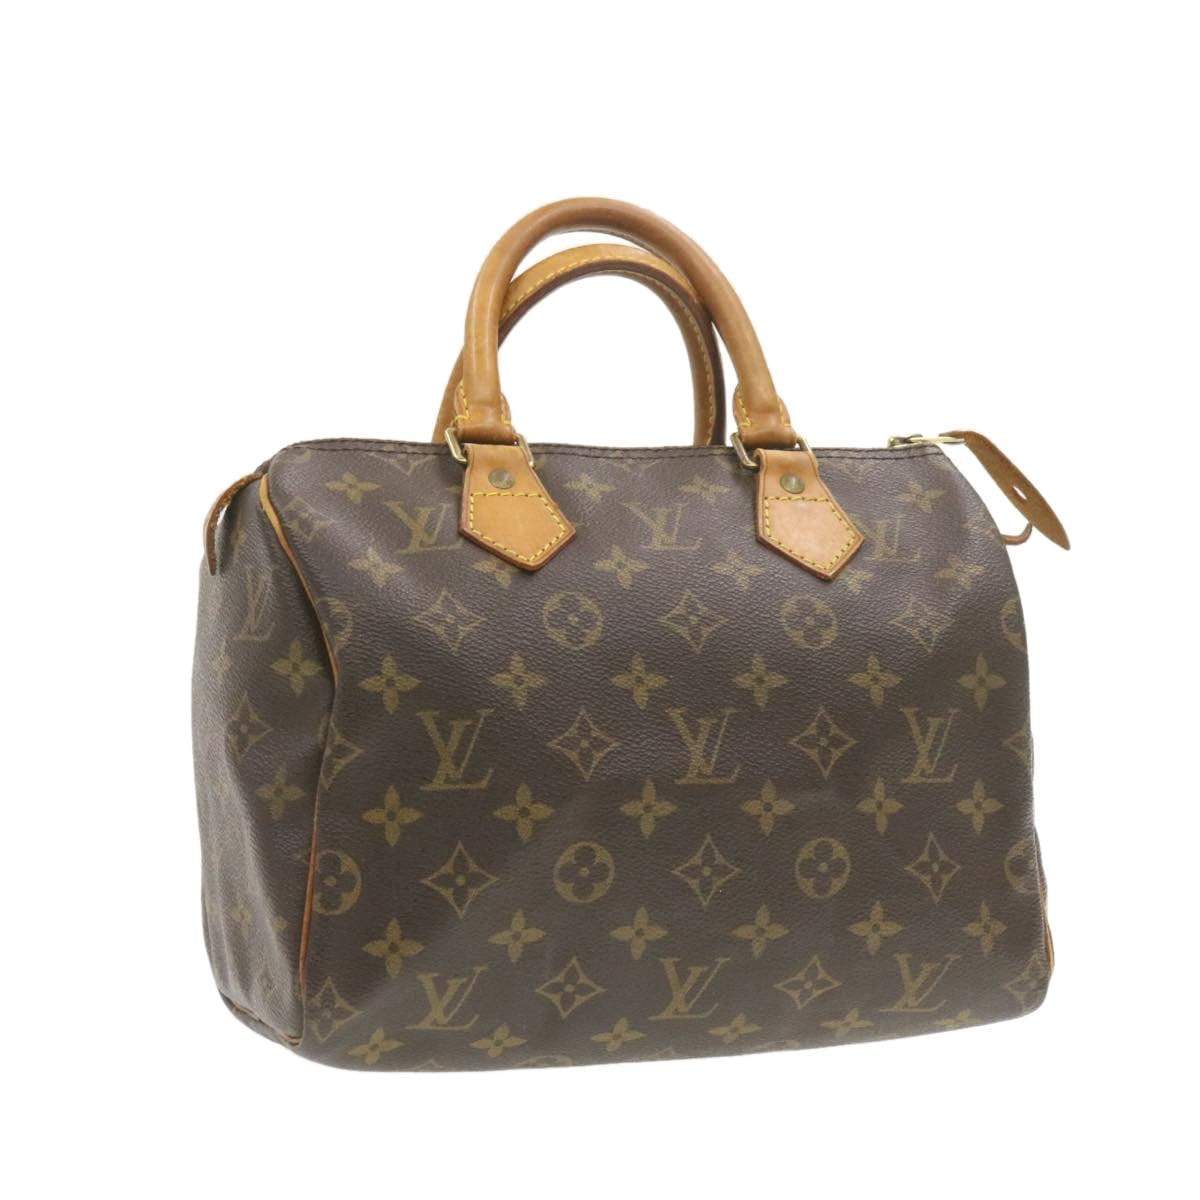 Preloved Louis Vuitton Monogram Speedy 25 Handbag SP0092 082323 $100 OFF